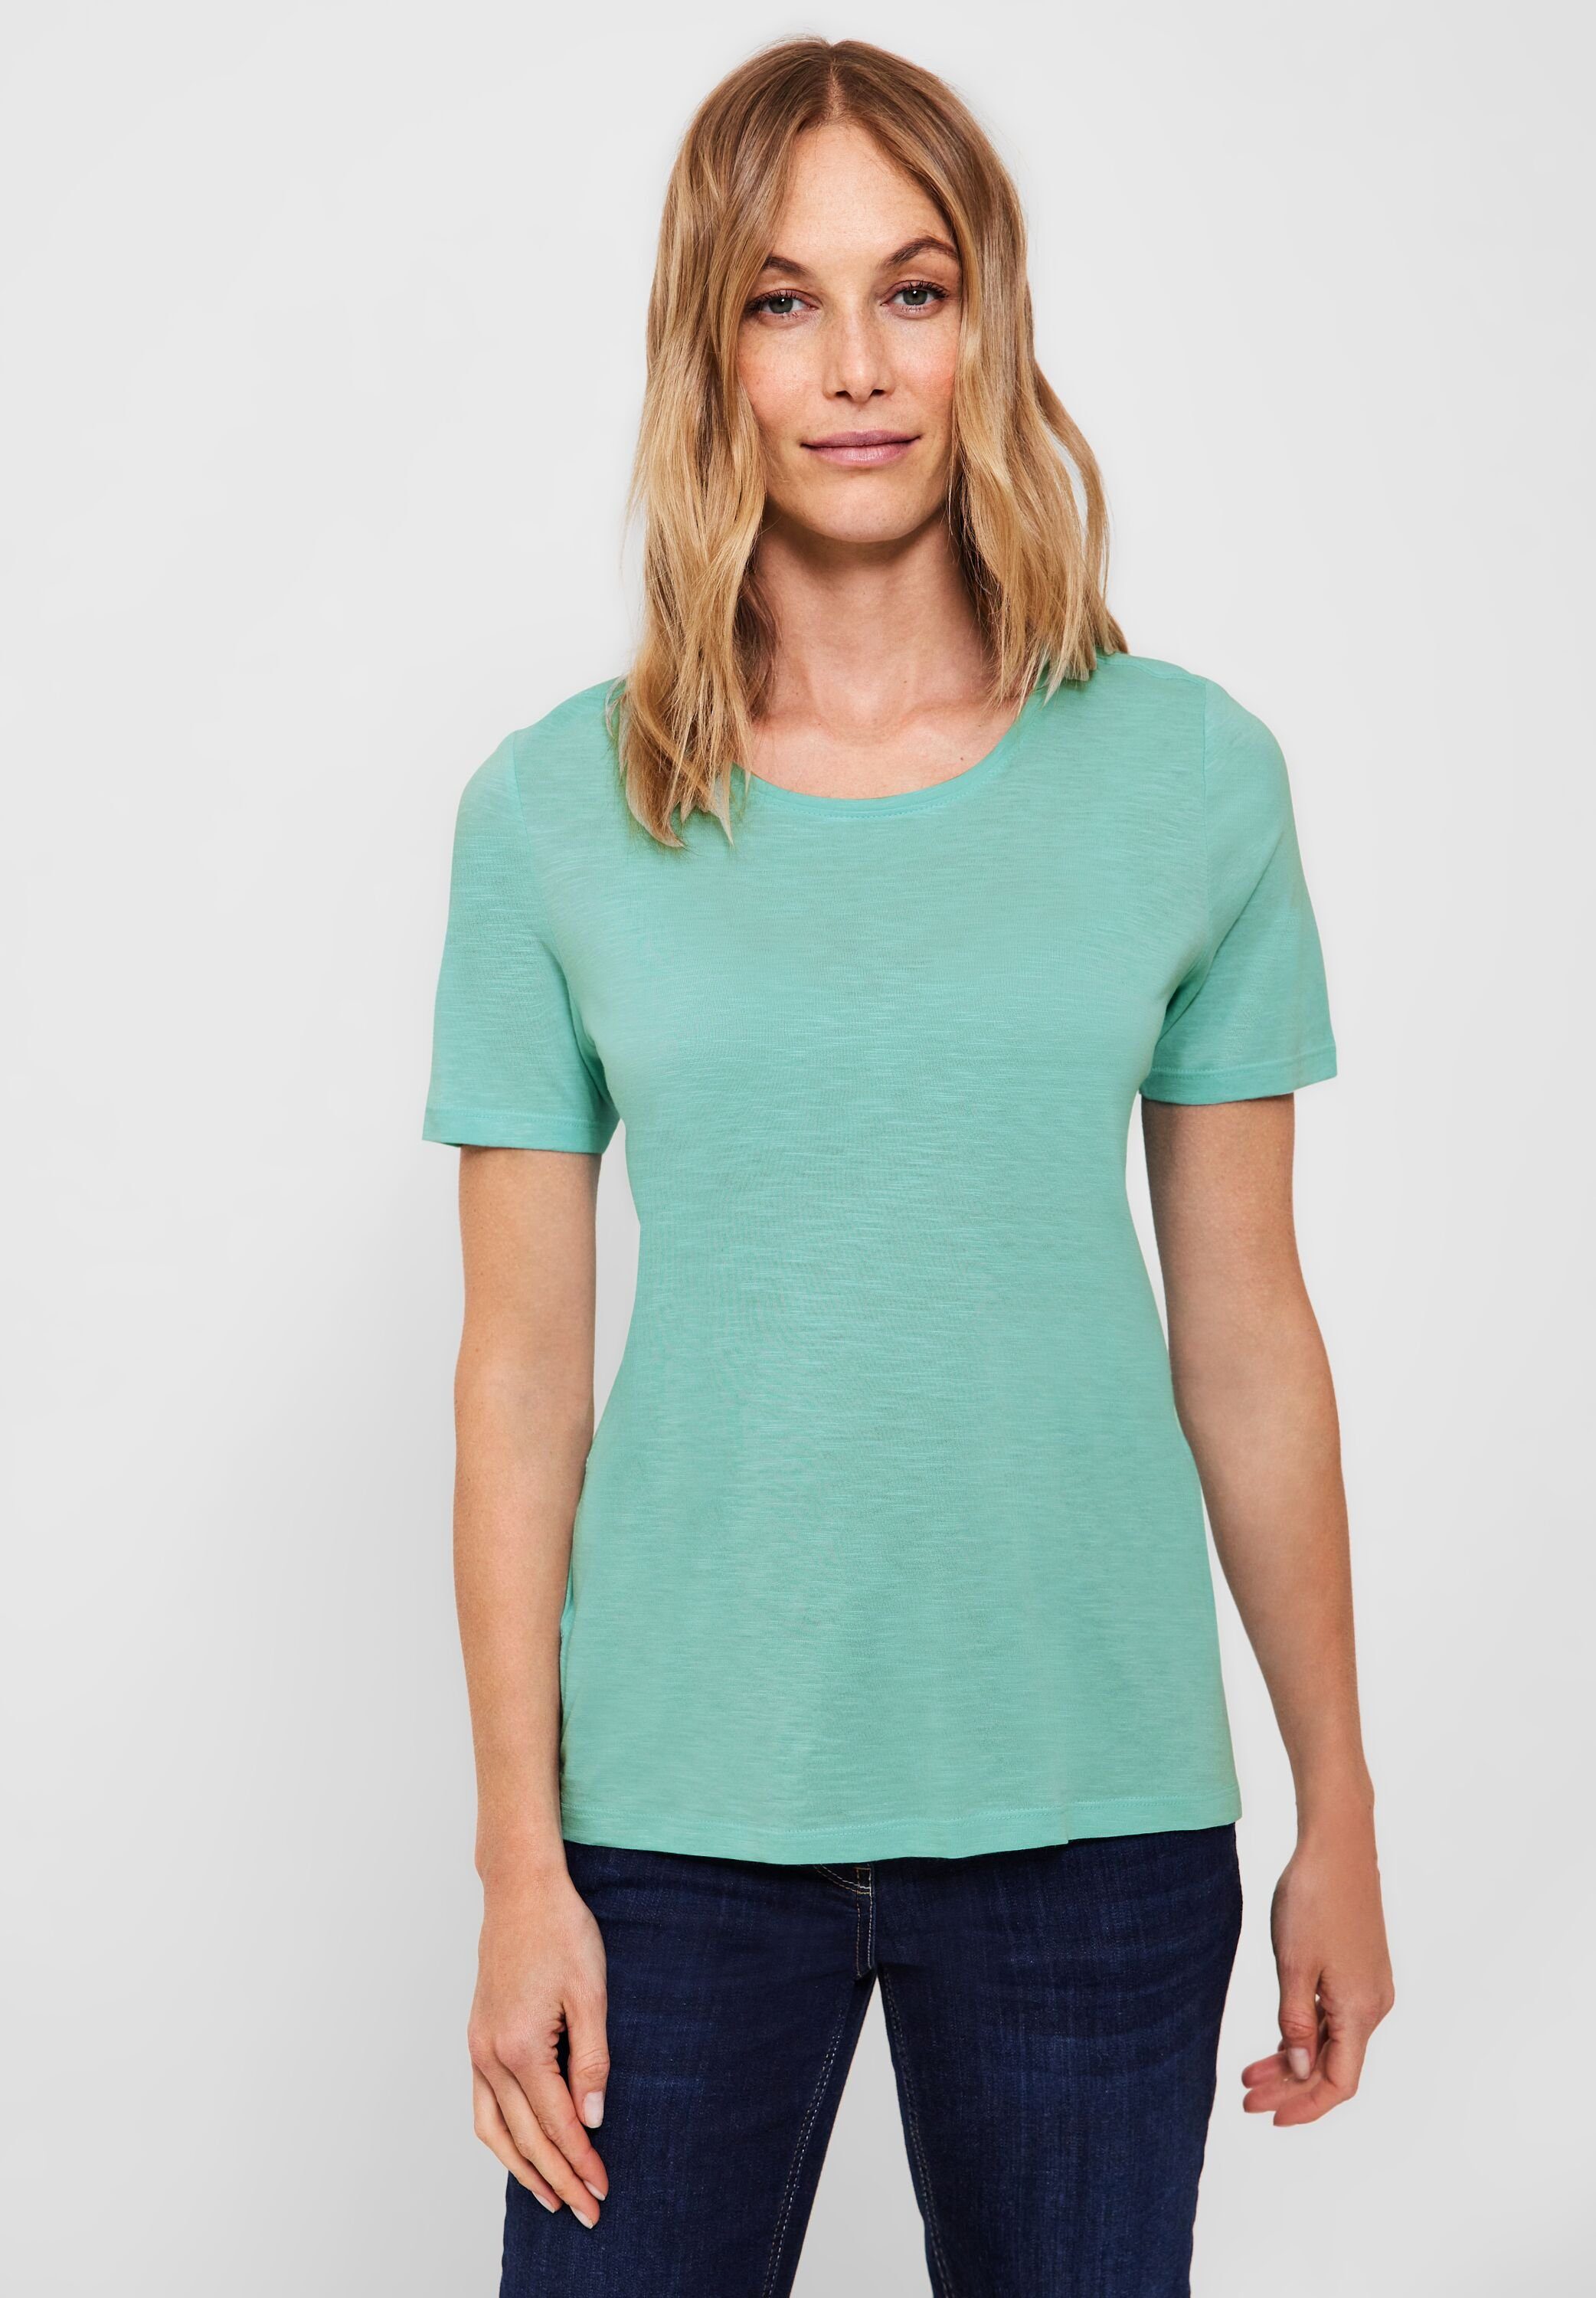 Cecil T-Shirt aus Baumwolle mint reiner cool green